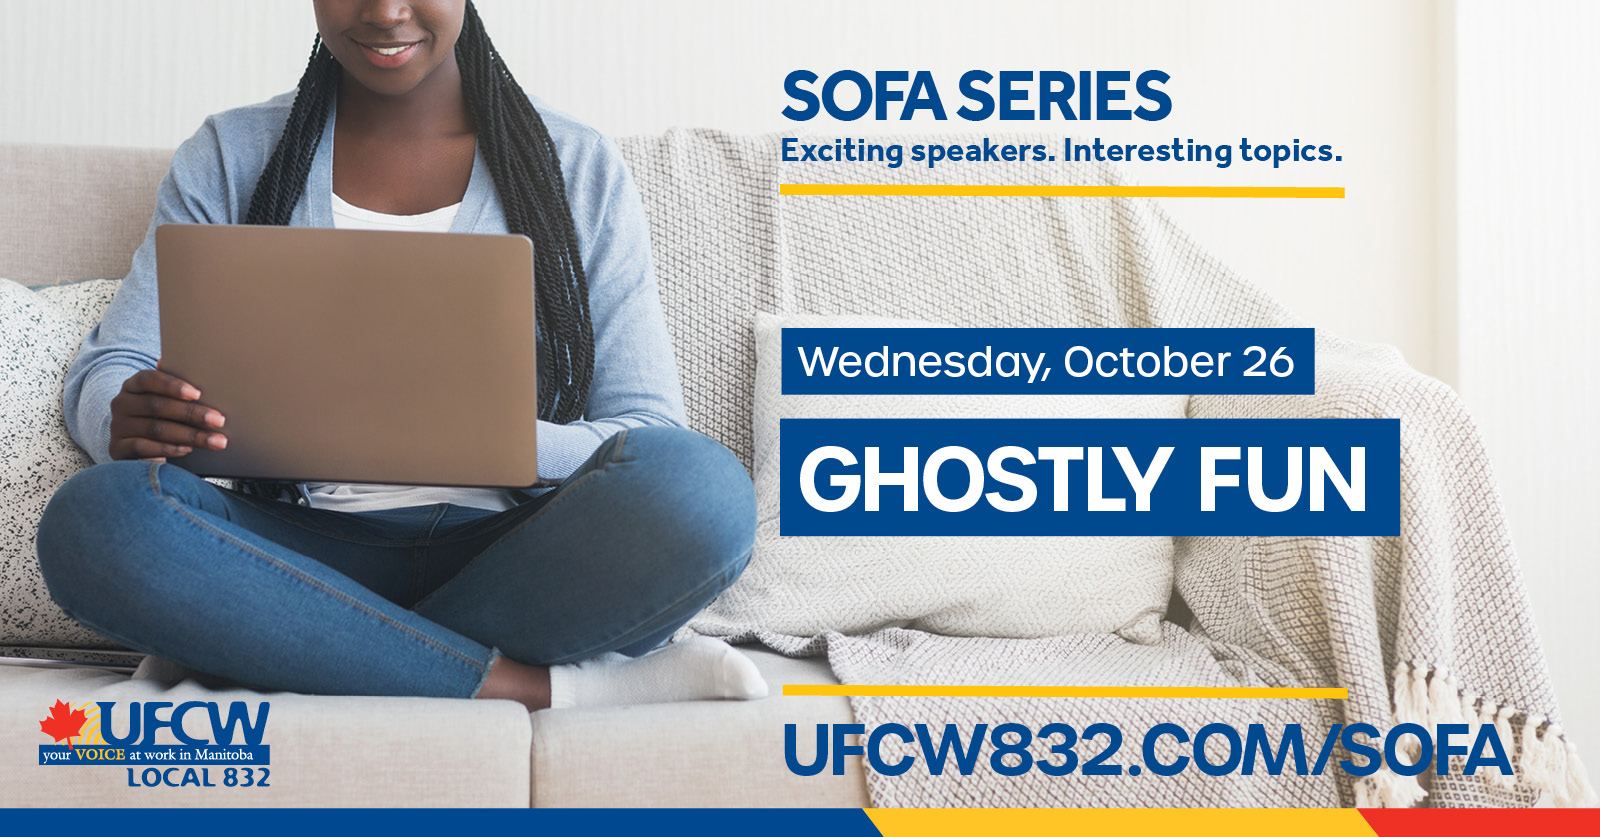 Sofa Series October: Ghostly Fun